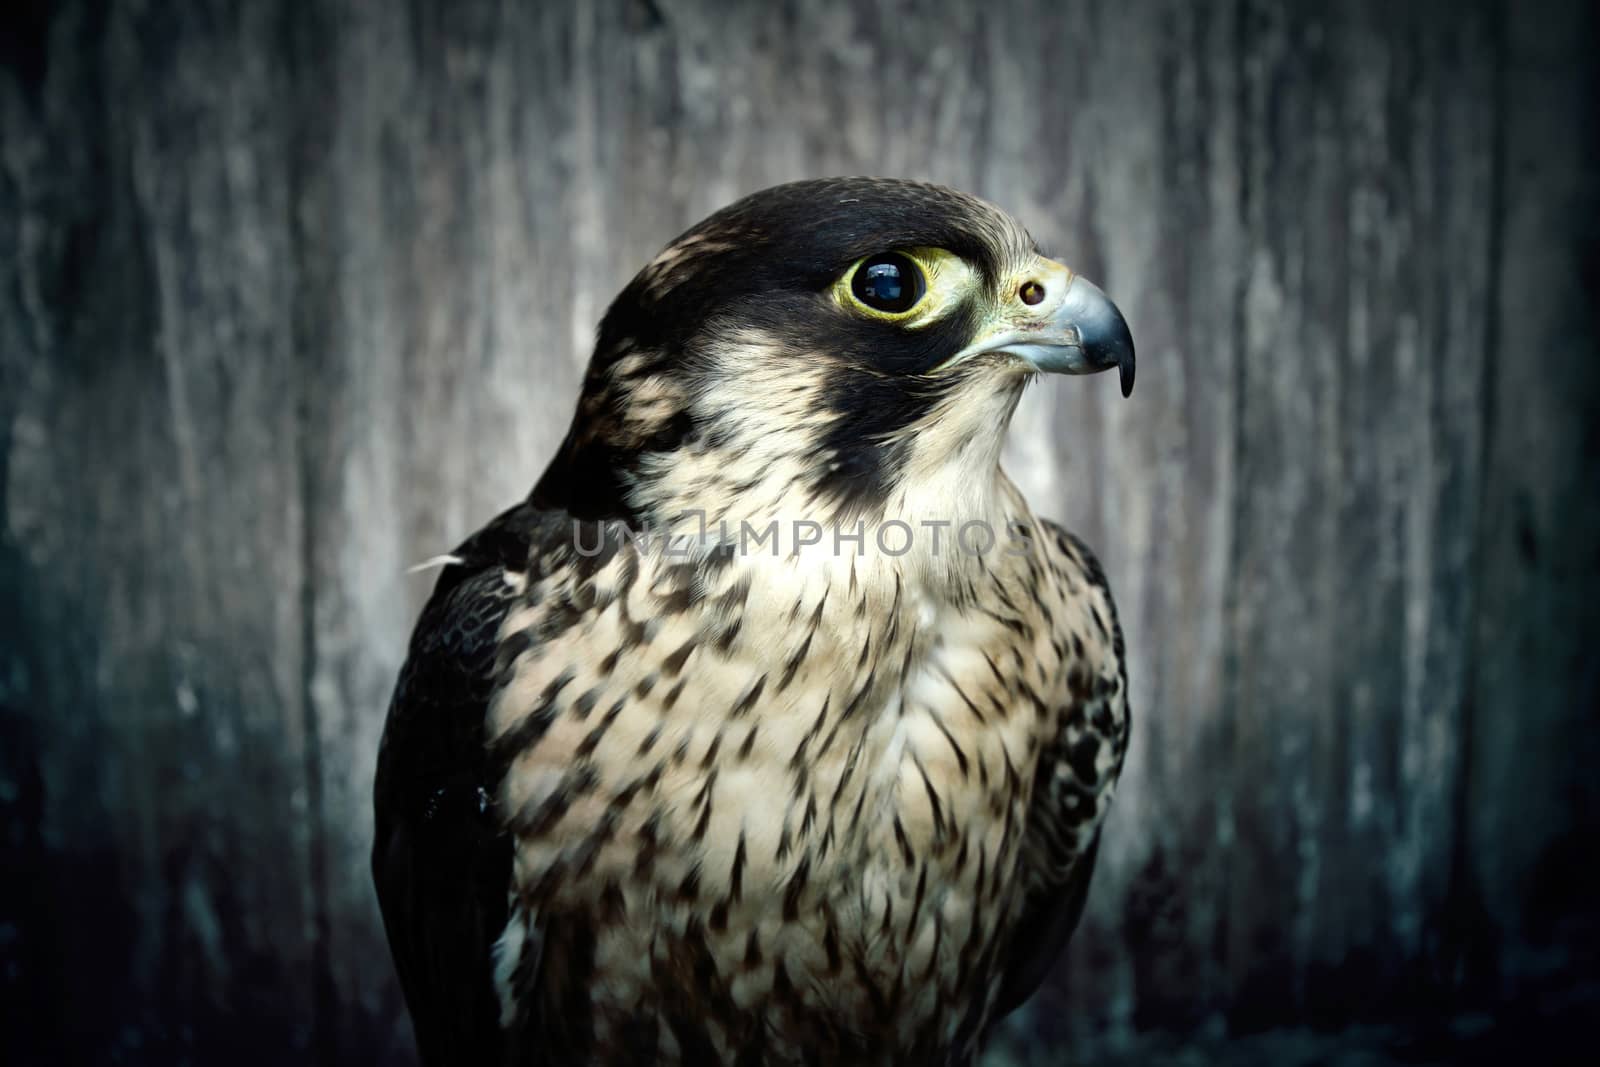 Peregrine falcon, Duck hawk close up. Bird of prey portrait.